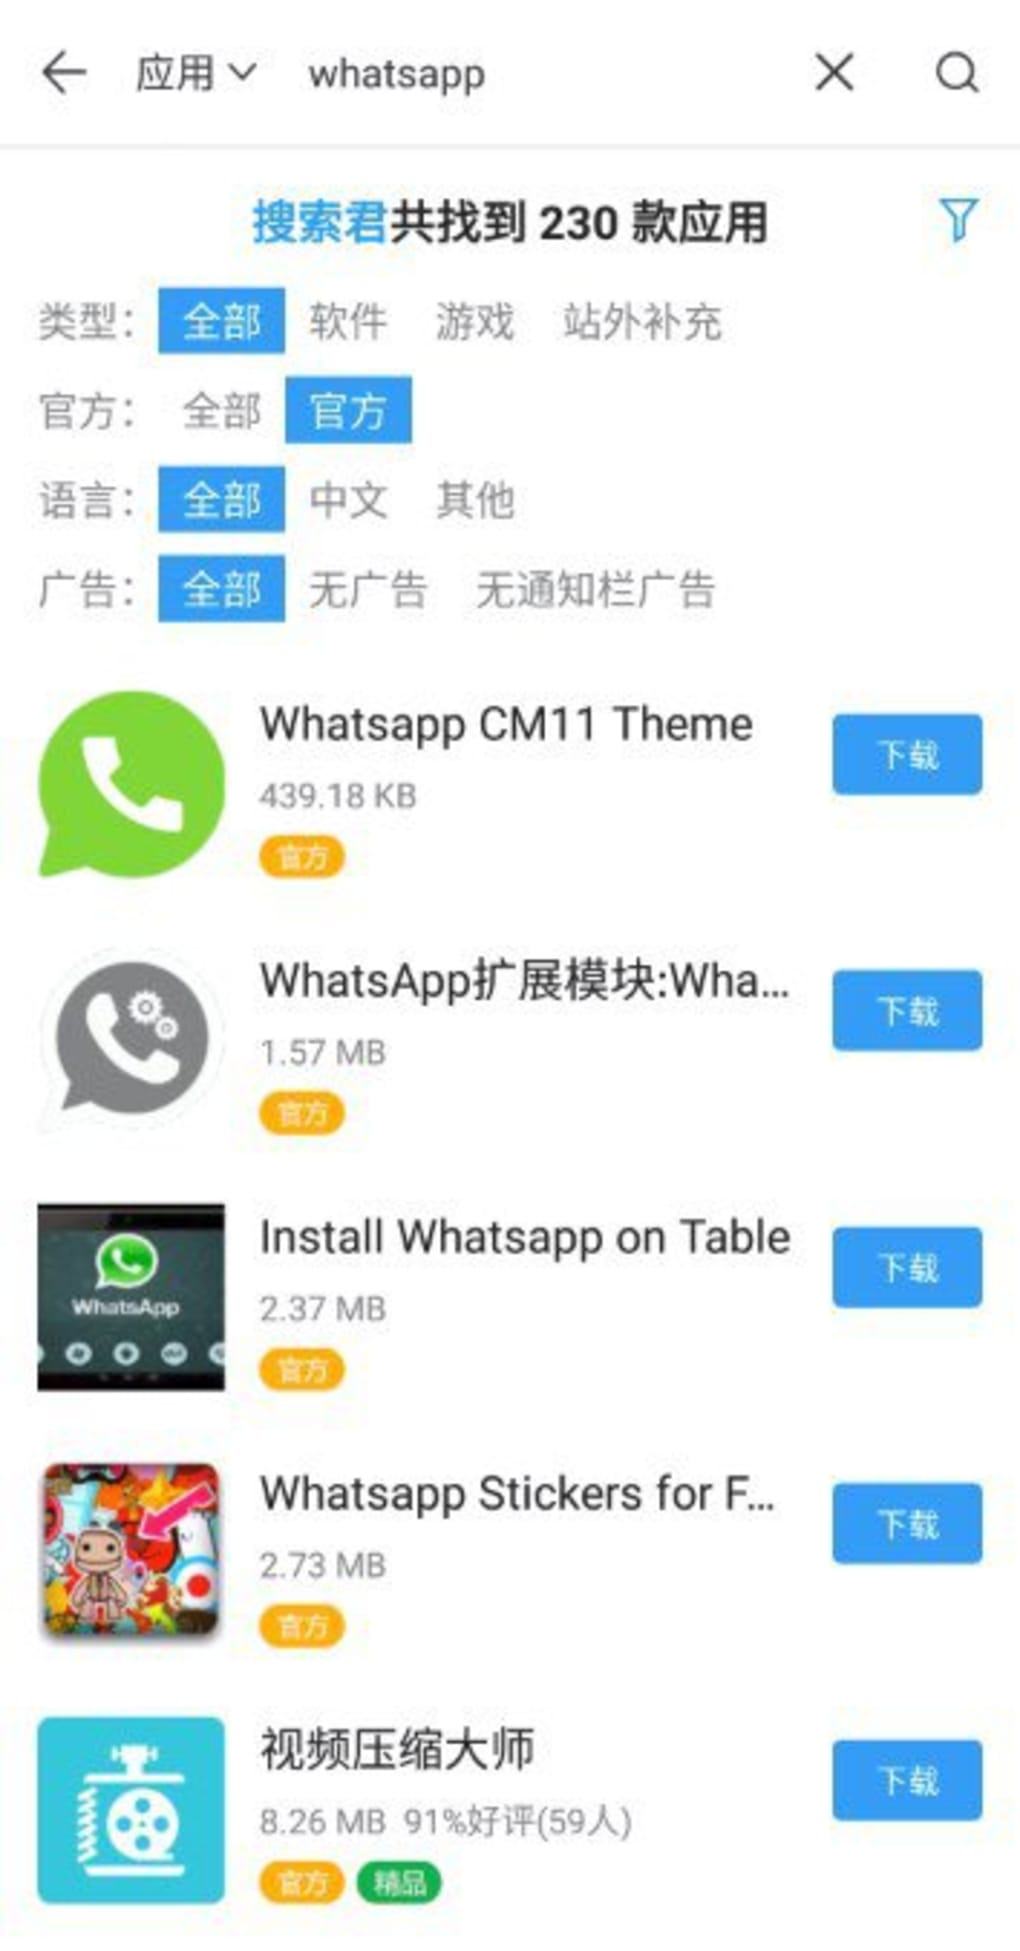 AppChina APK para Android - Download